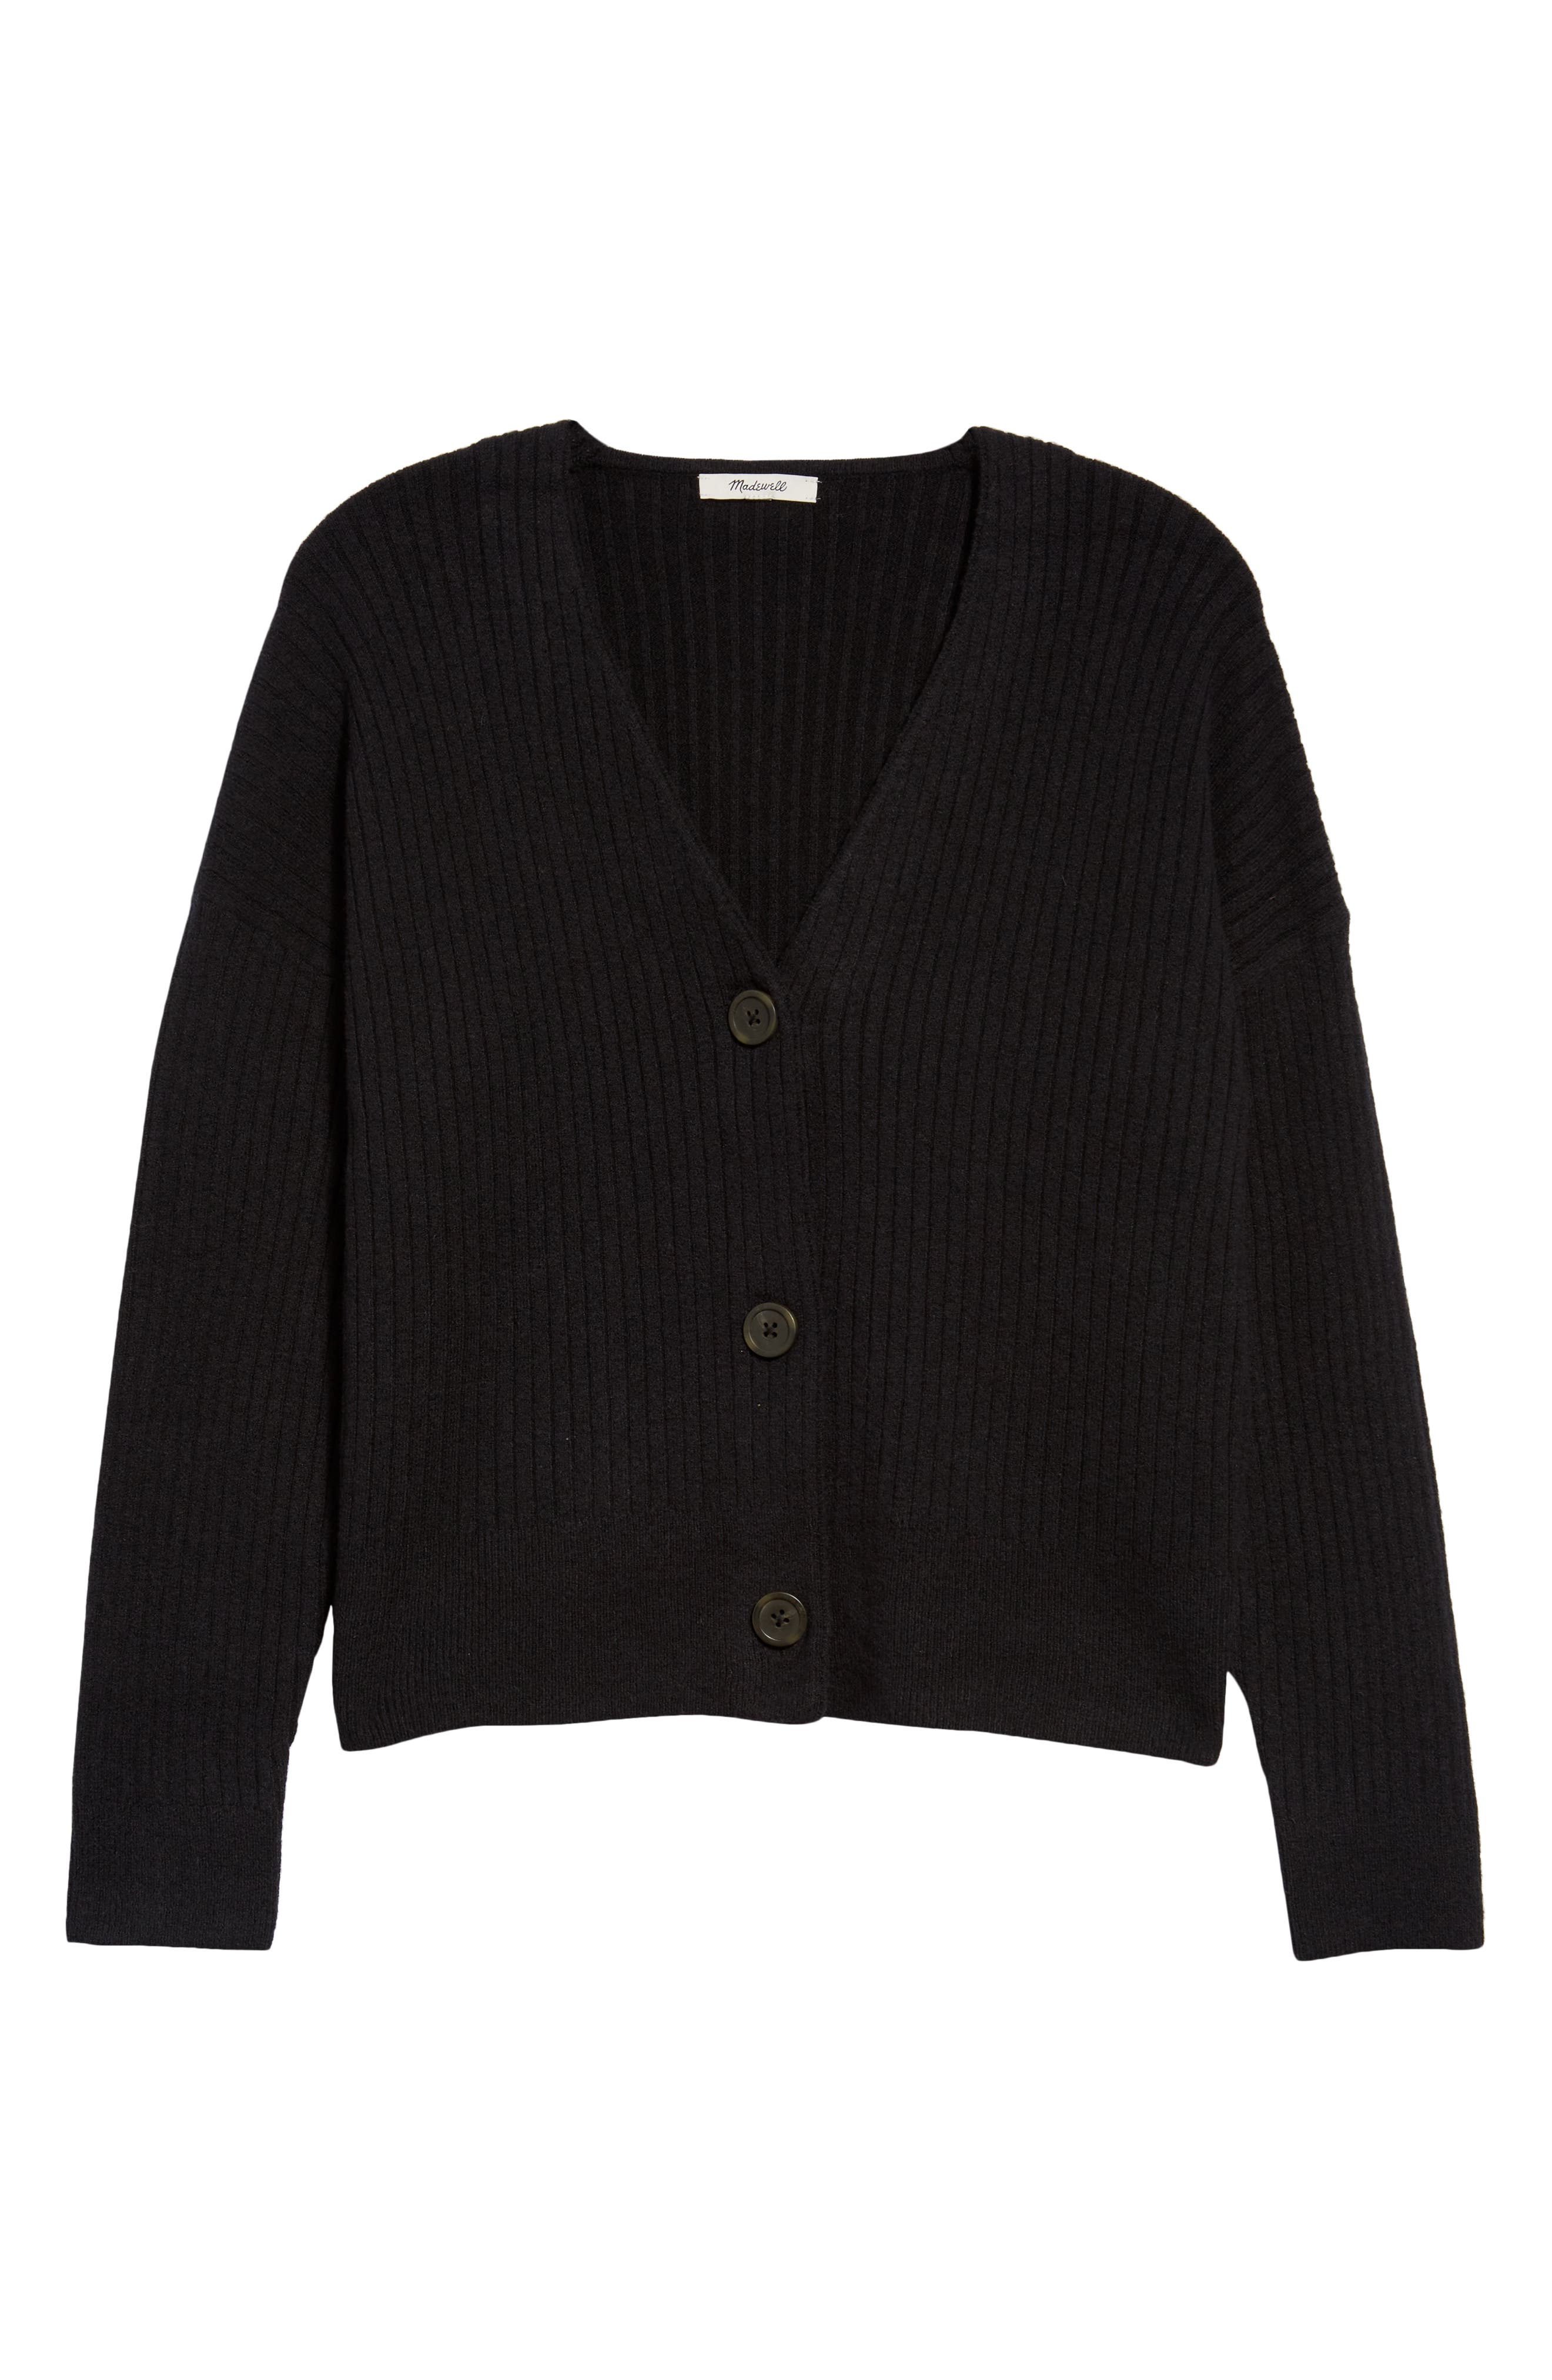 Lock Slit Layered Merino Wool Sweater in Black/Black at Nordstrom Nordstrom Women Clothing Sweaters Cardigans Boleros 